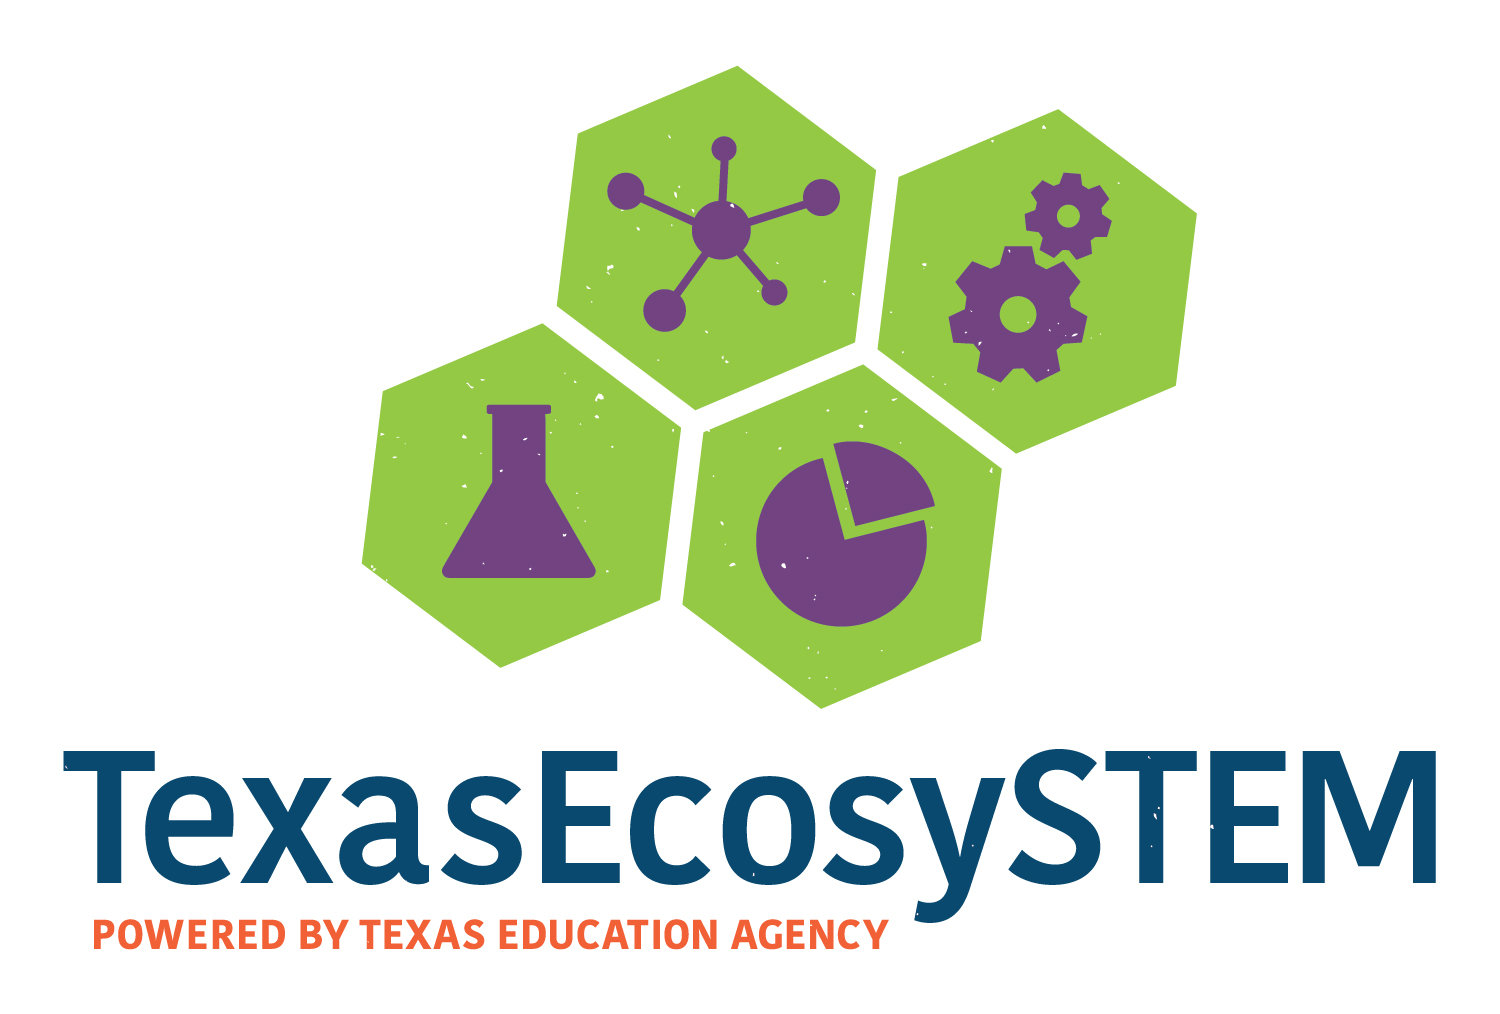 Texas Ecosystem Logo. Powered by Texas Education Agency